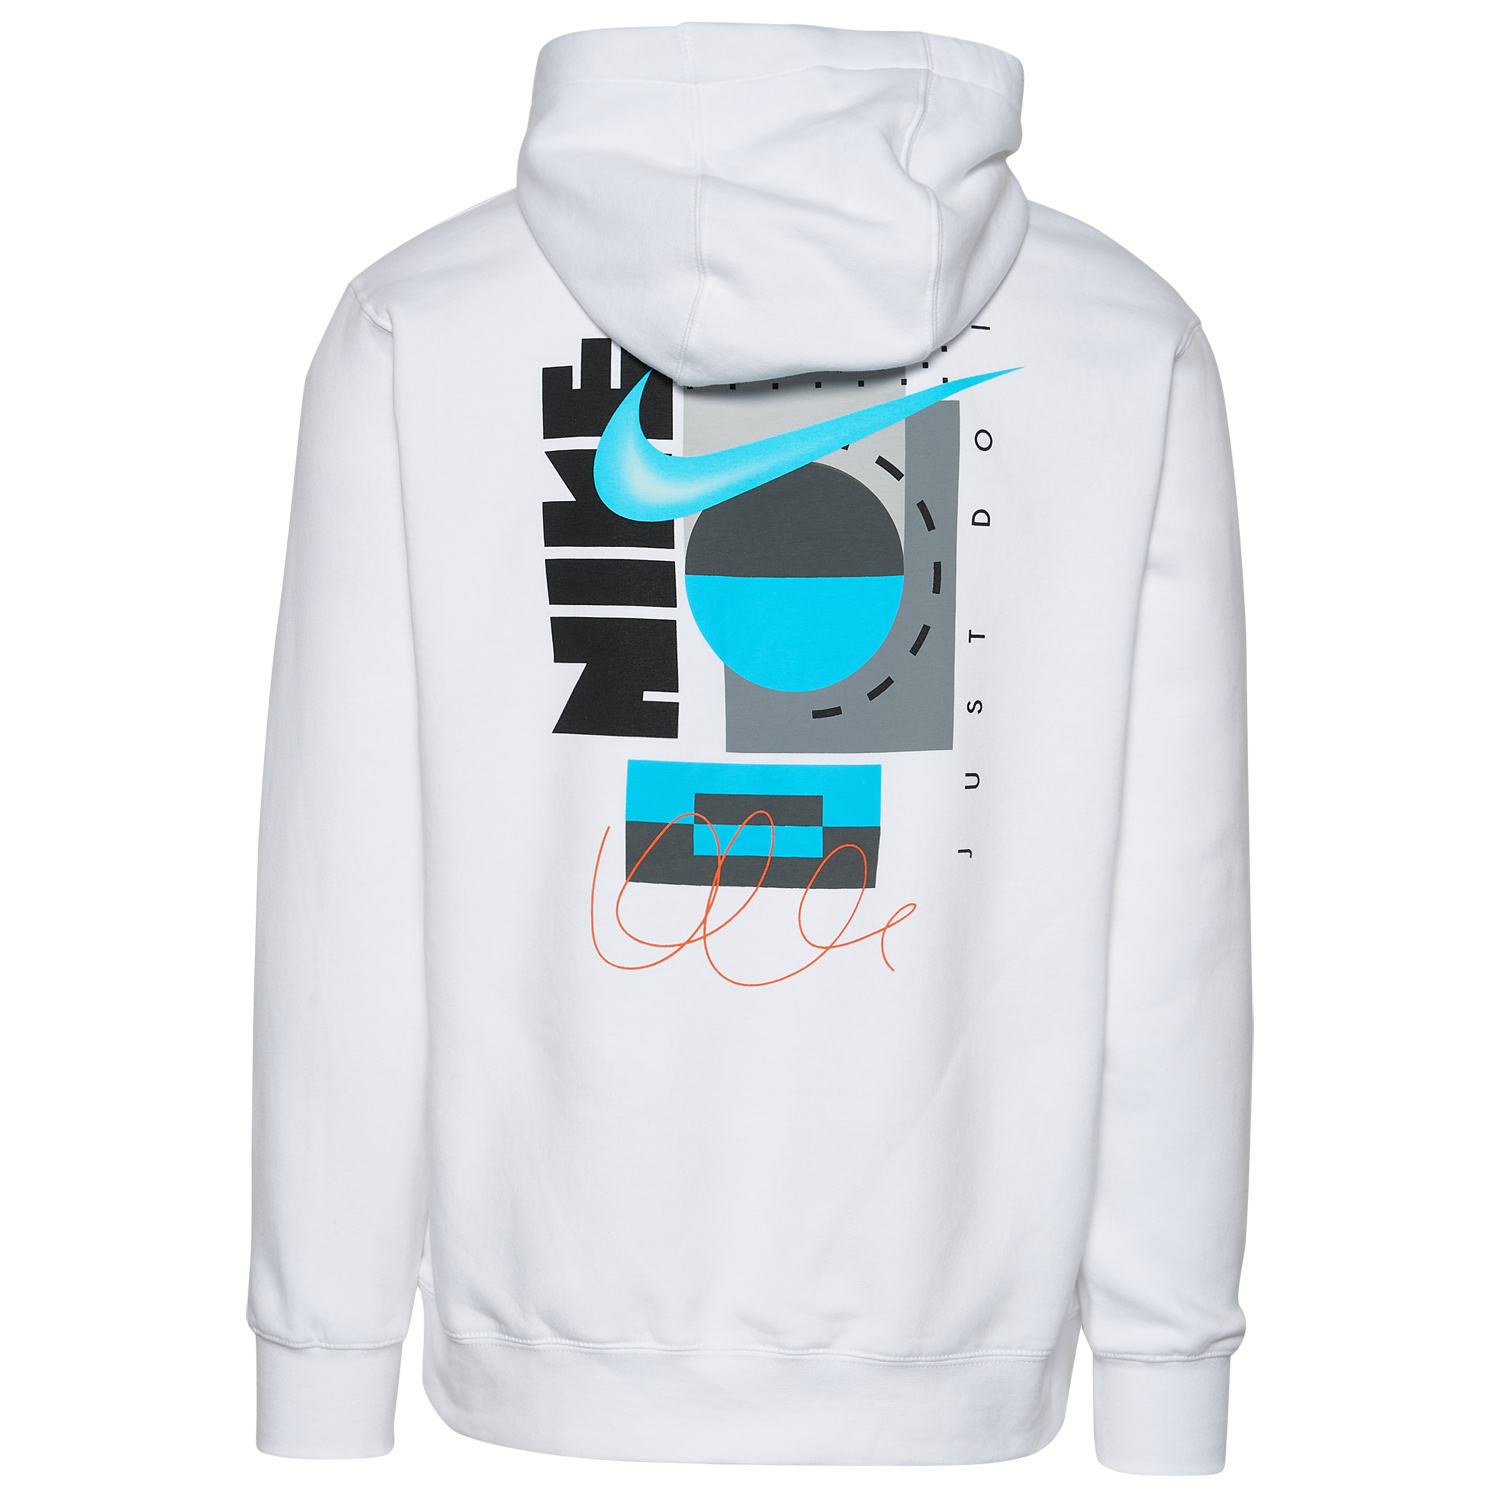 nike-illustration-hoodie-white-teal-blue-2